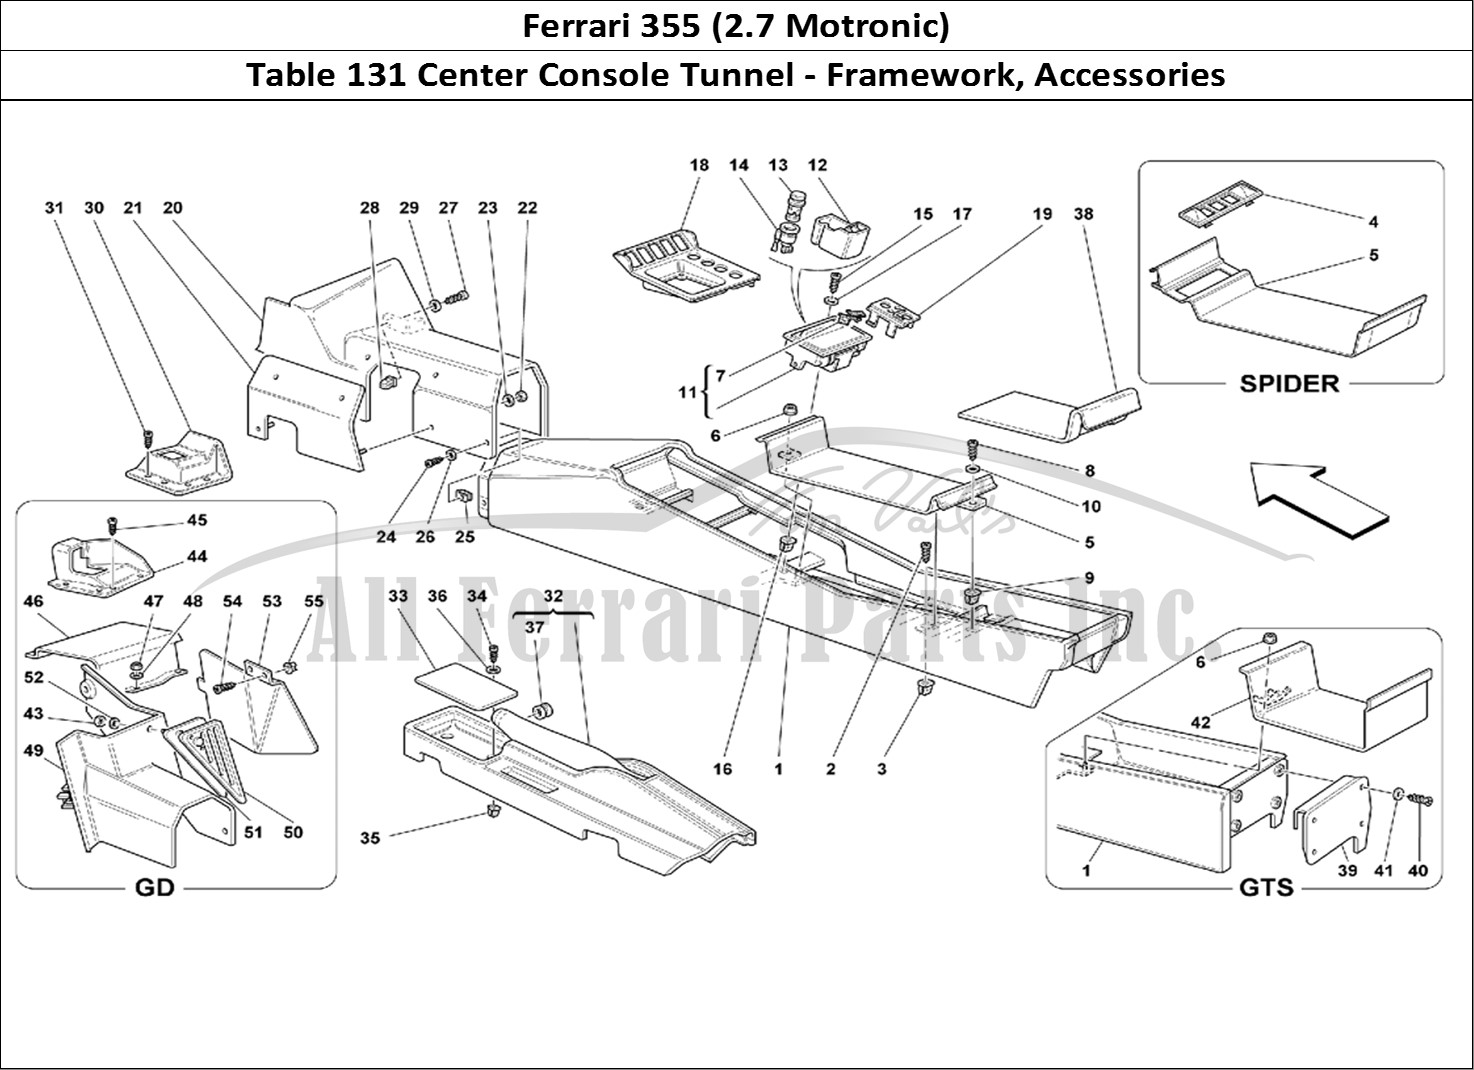 Ferrari Parts Ferrari 355 (2.7 Motronic) Page 131 Tunnel - Framework and Ac